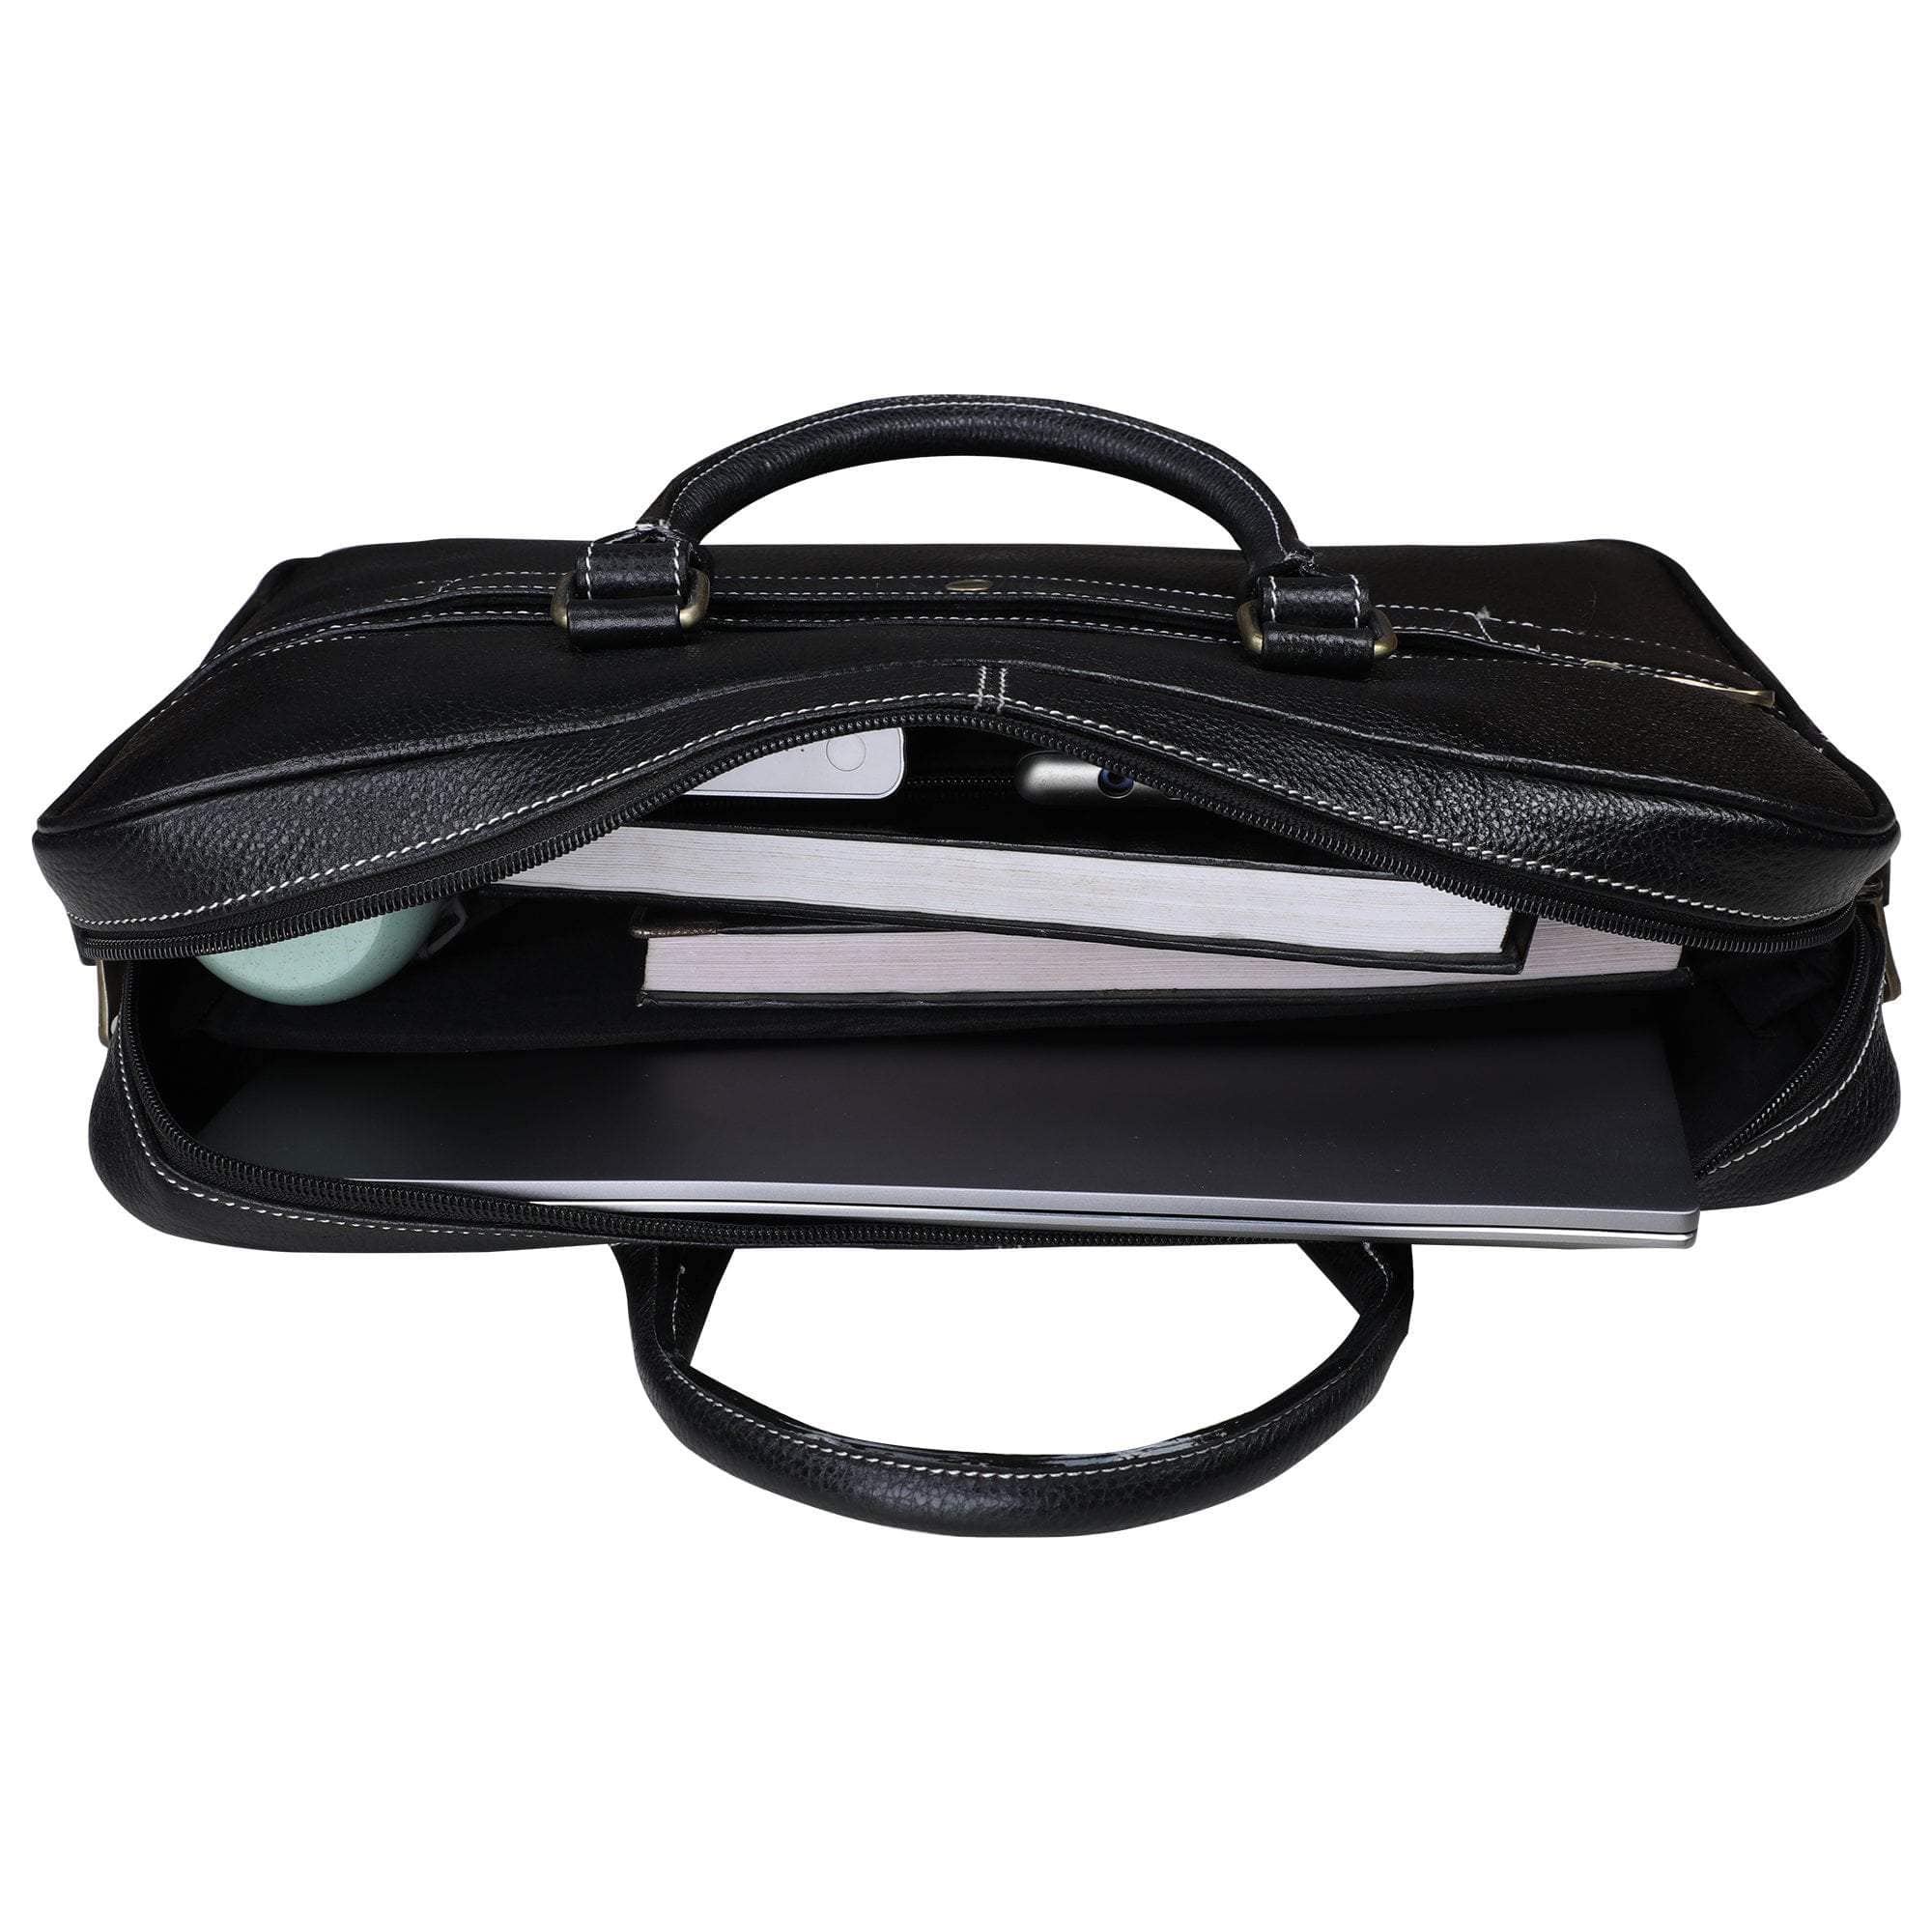 KINNOTI LAPTOP BAGS Unisex Genuine Leather Laptop Bag